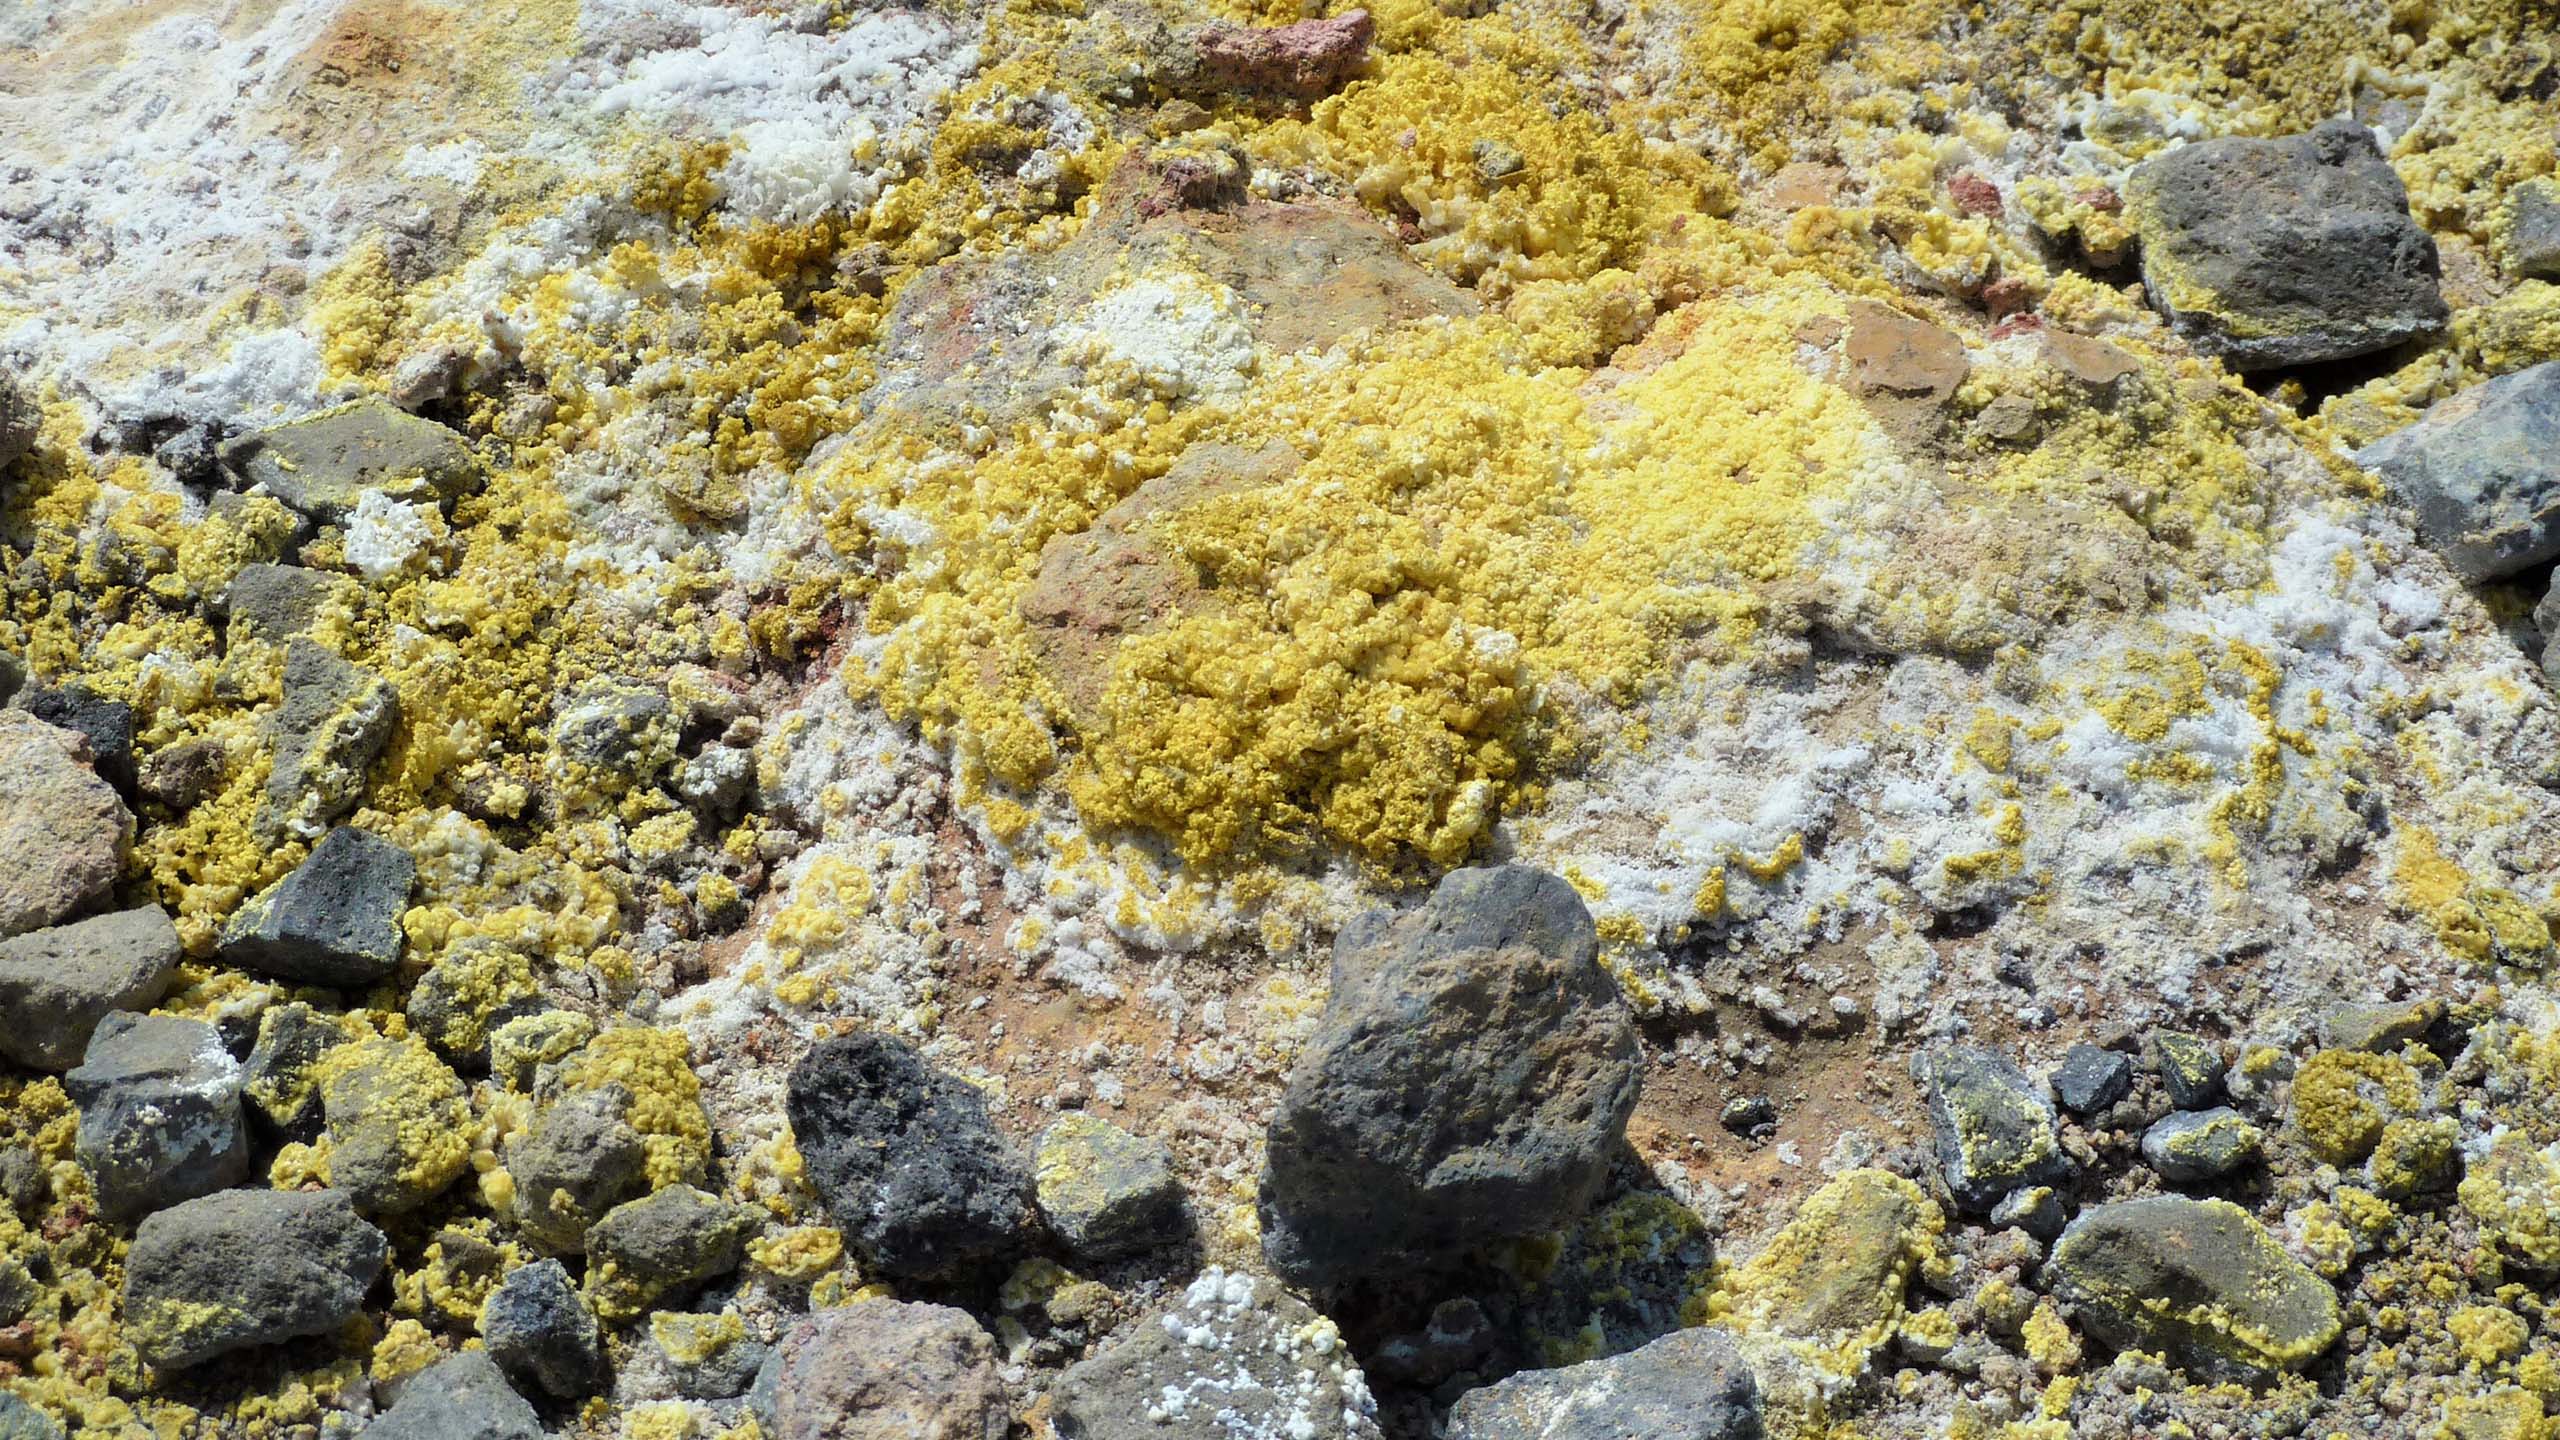 Volcanic sulfhur crystals: Sulphur crystals on the fumaroles of Georgios crater in Nea Kameni